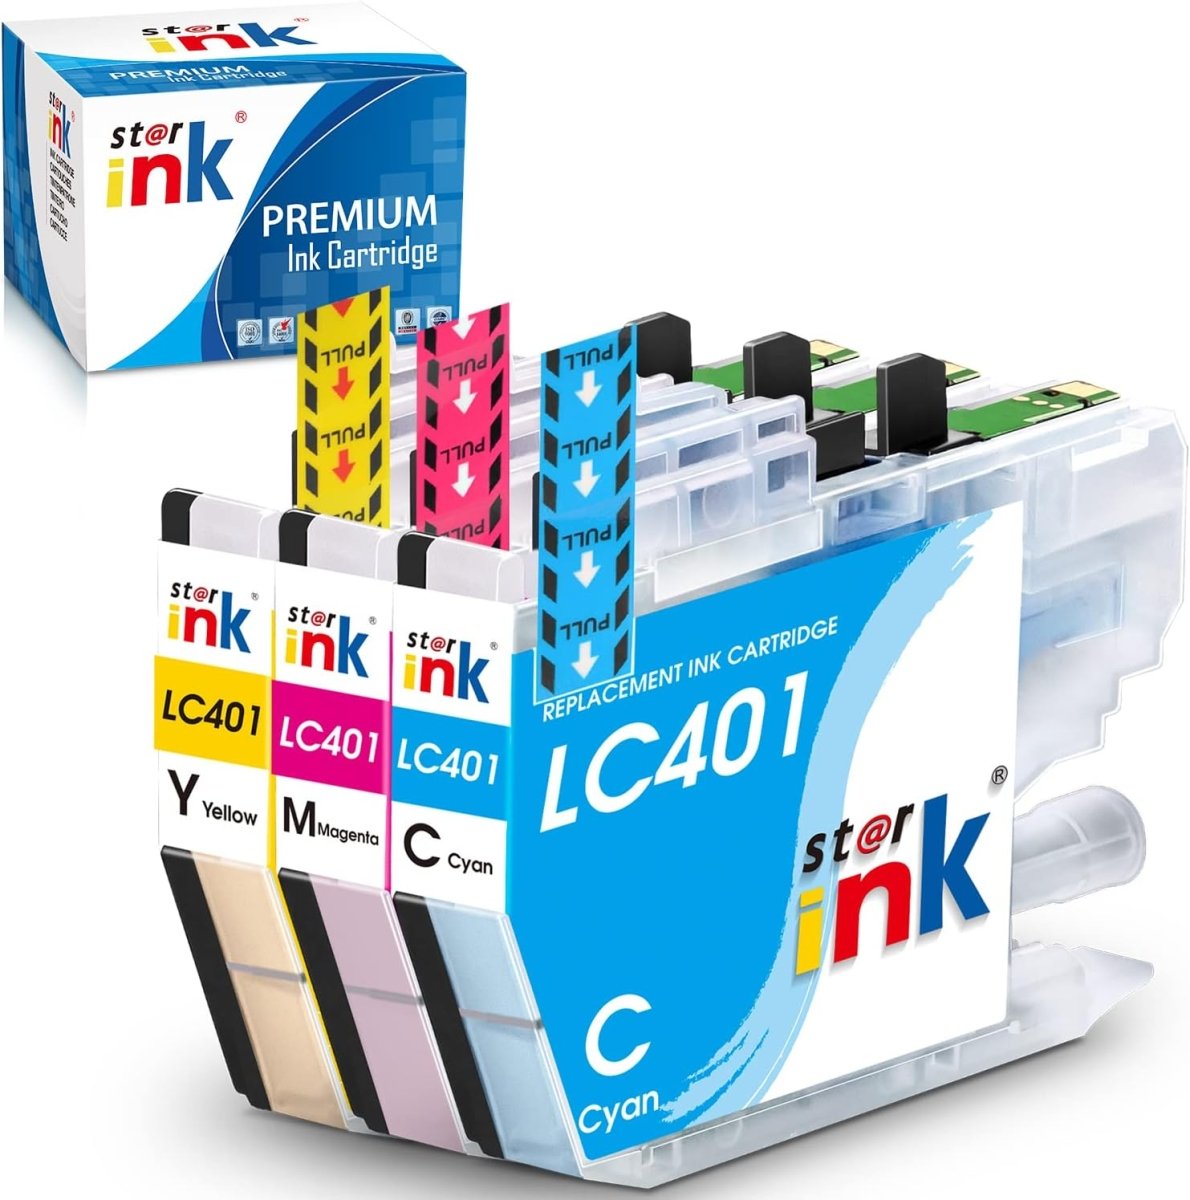 Starink Compatible Brother LC401 Ink Cartridges 3 Packs(C/M/Y) - Linford Office:Printer Ink & Toner Cartridge